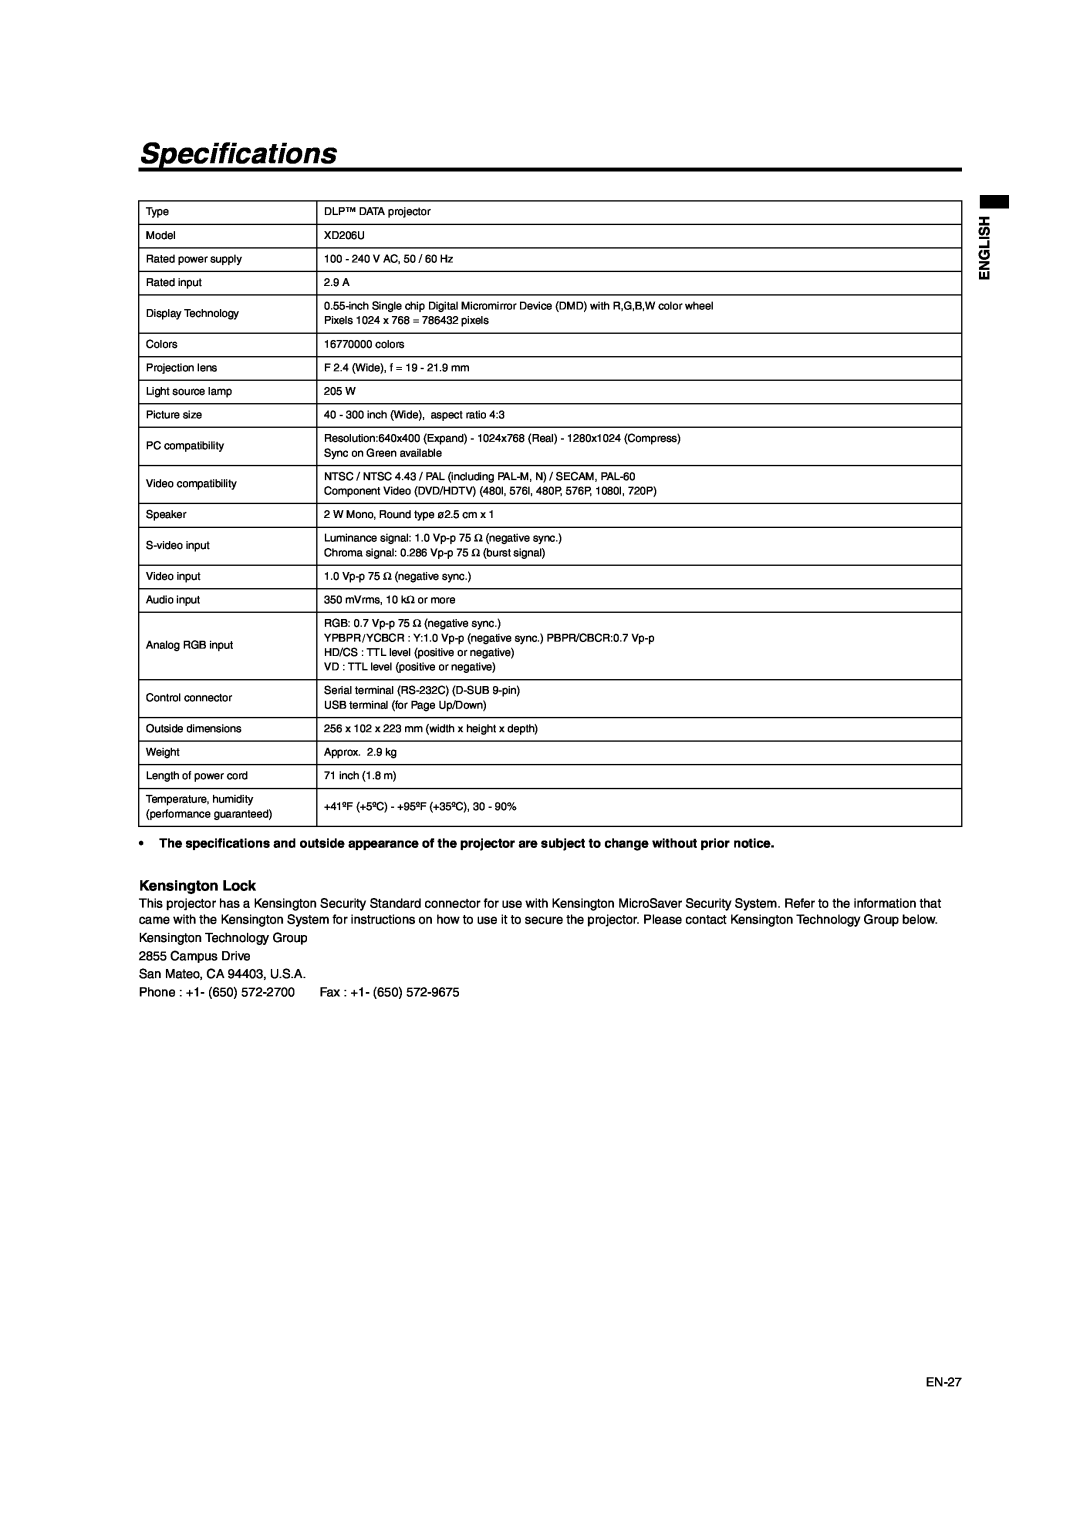 Mitsumi electronic XD206U user manual Specifications, Kensington Lock 